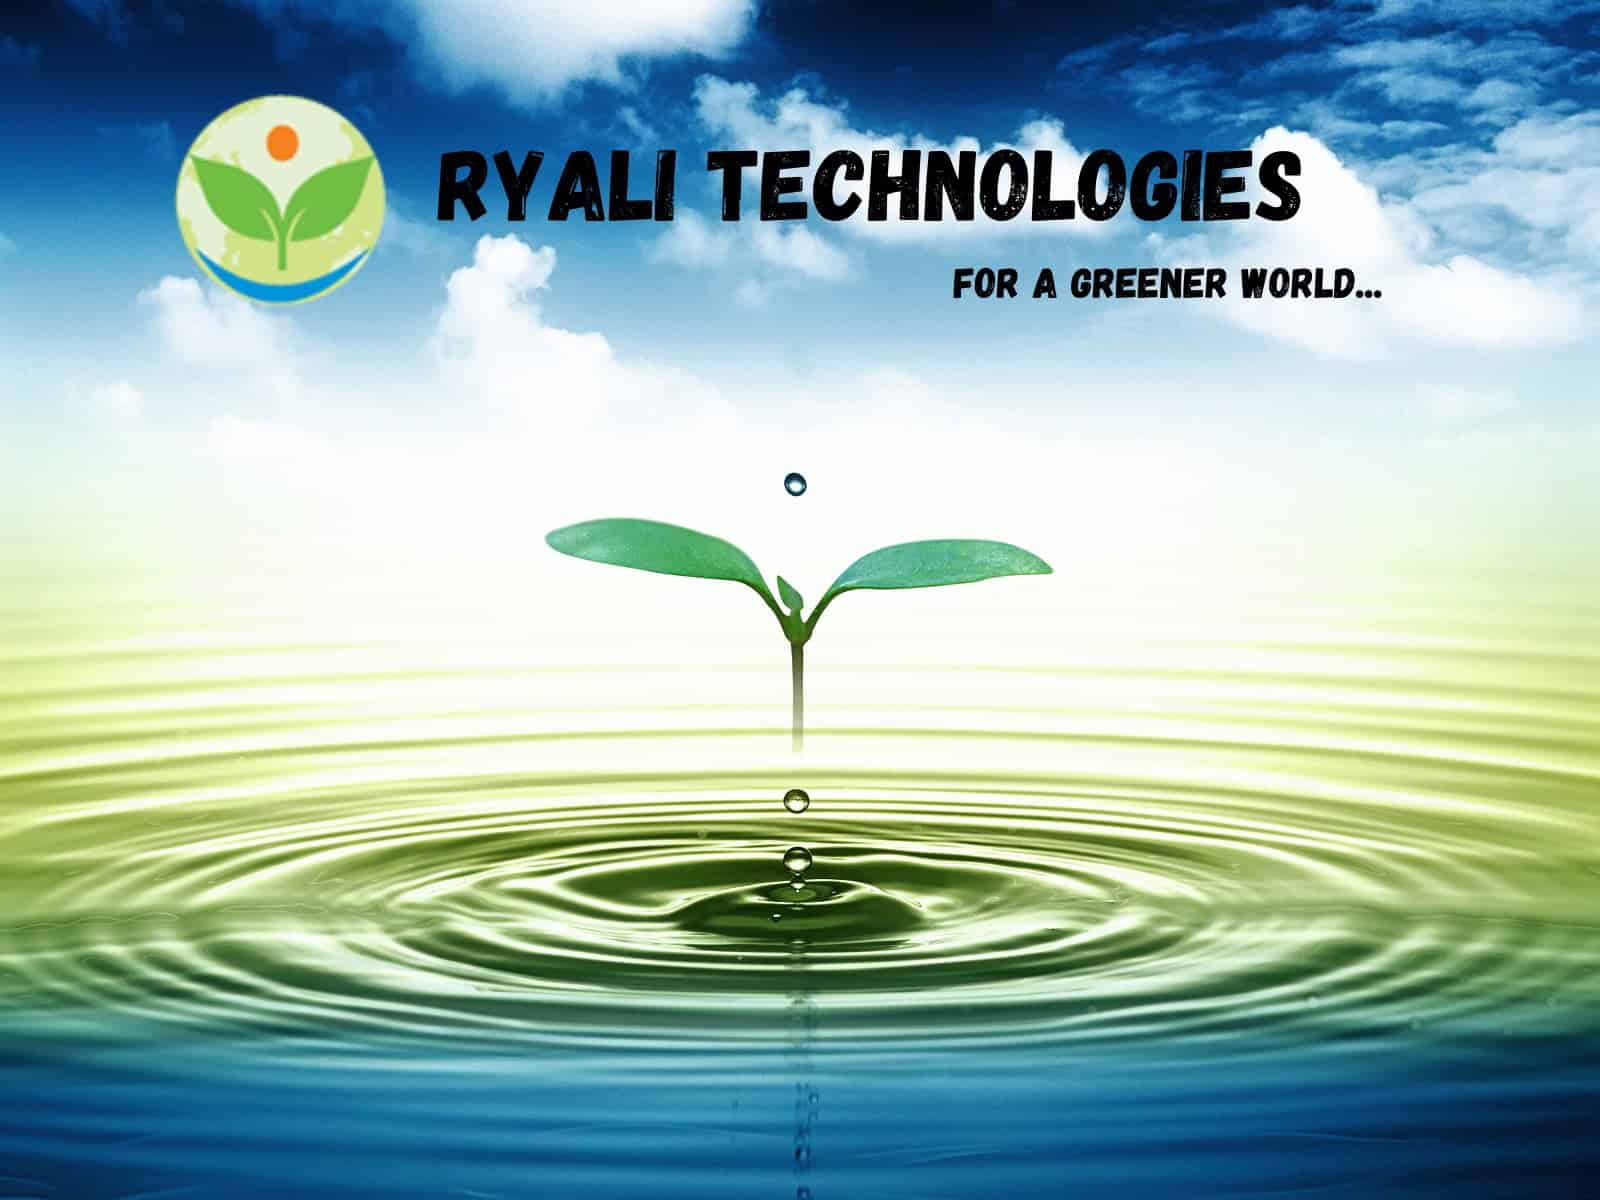 Ryali Technologies